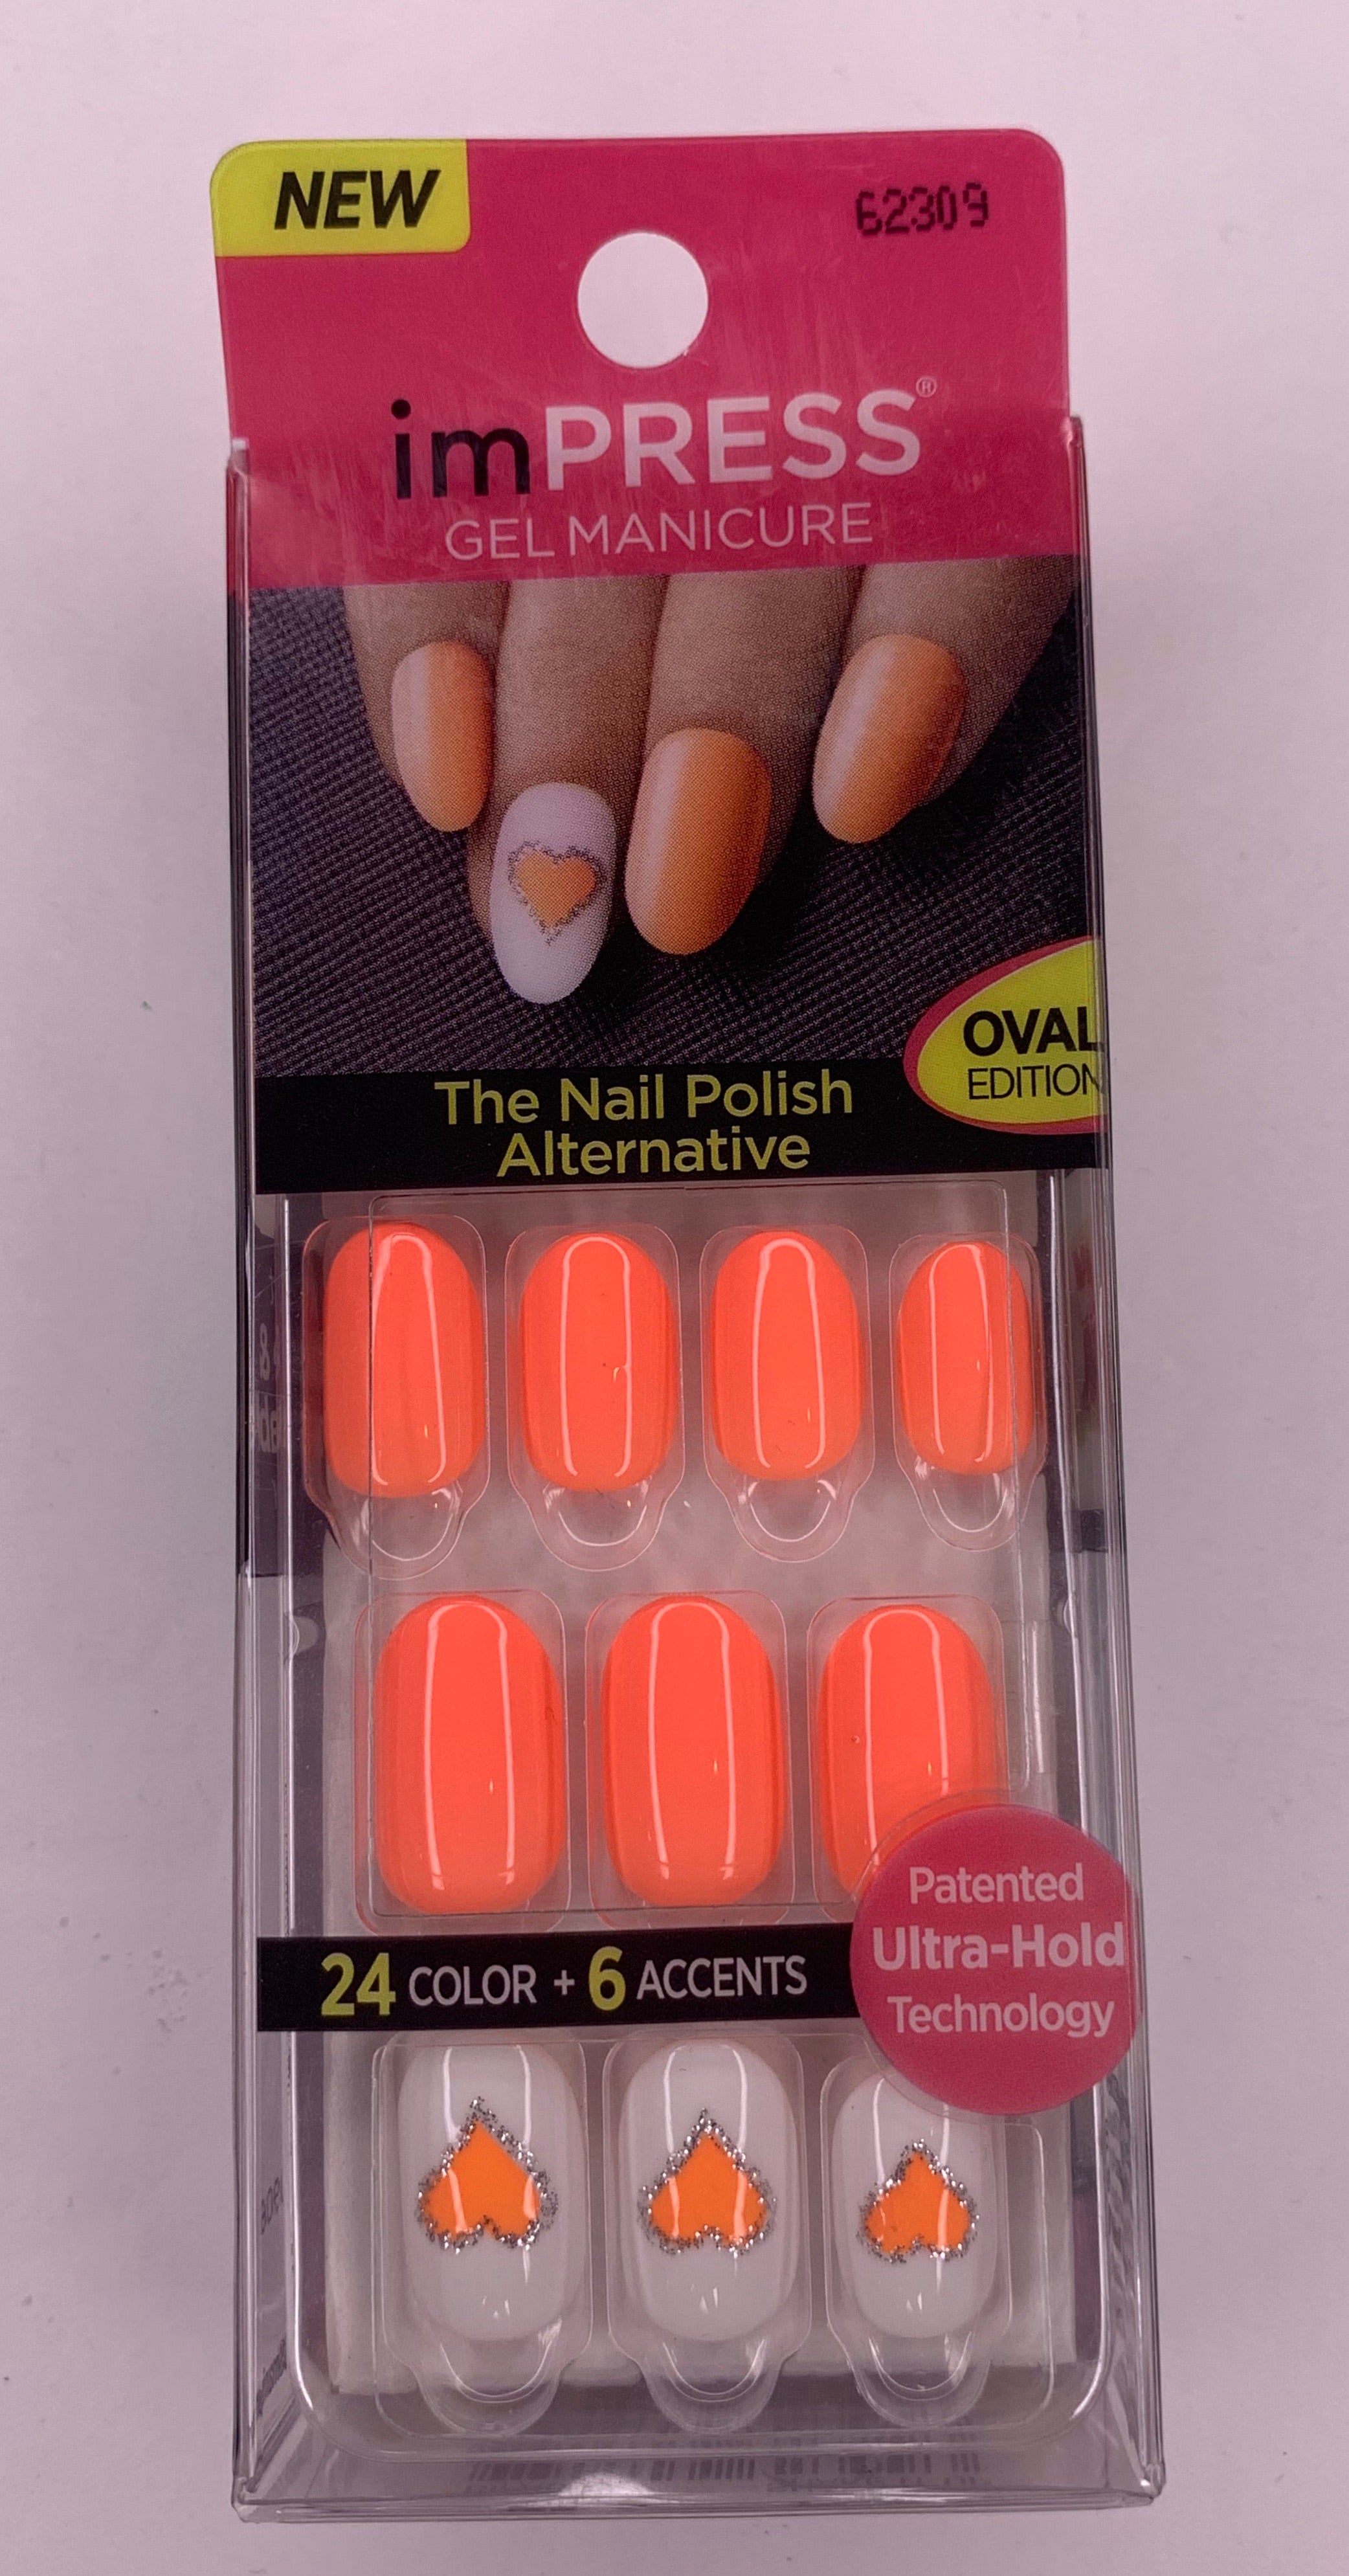 ImPress Gel Manicure Nail Polish Alternative Oval Edition 24 Color 6 Accents 62309